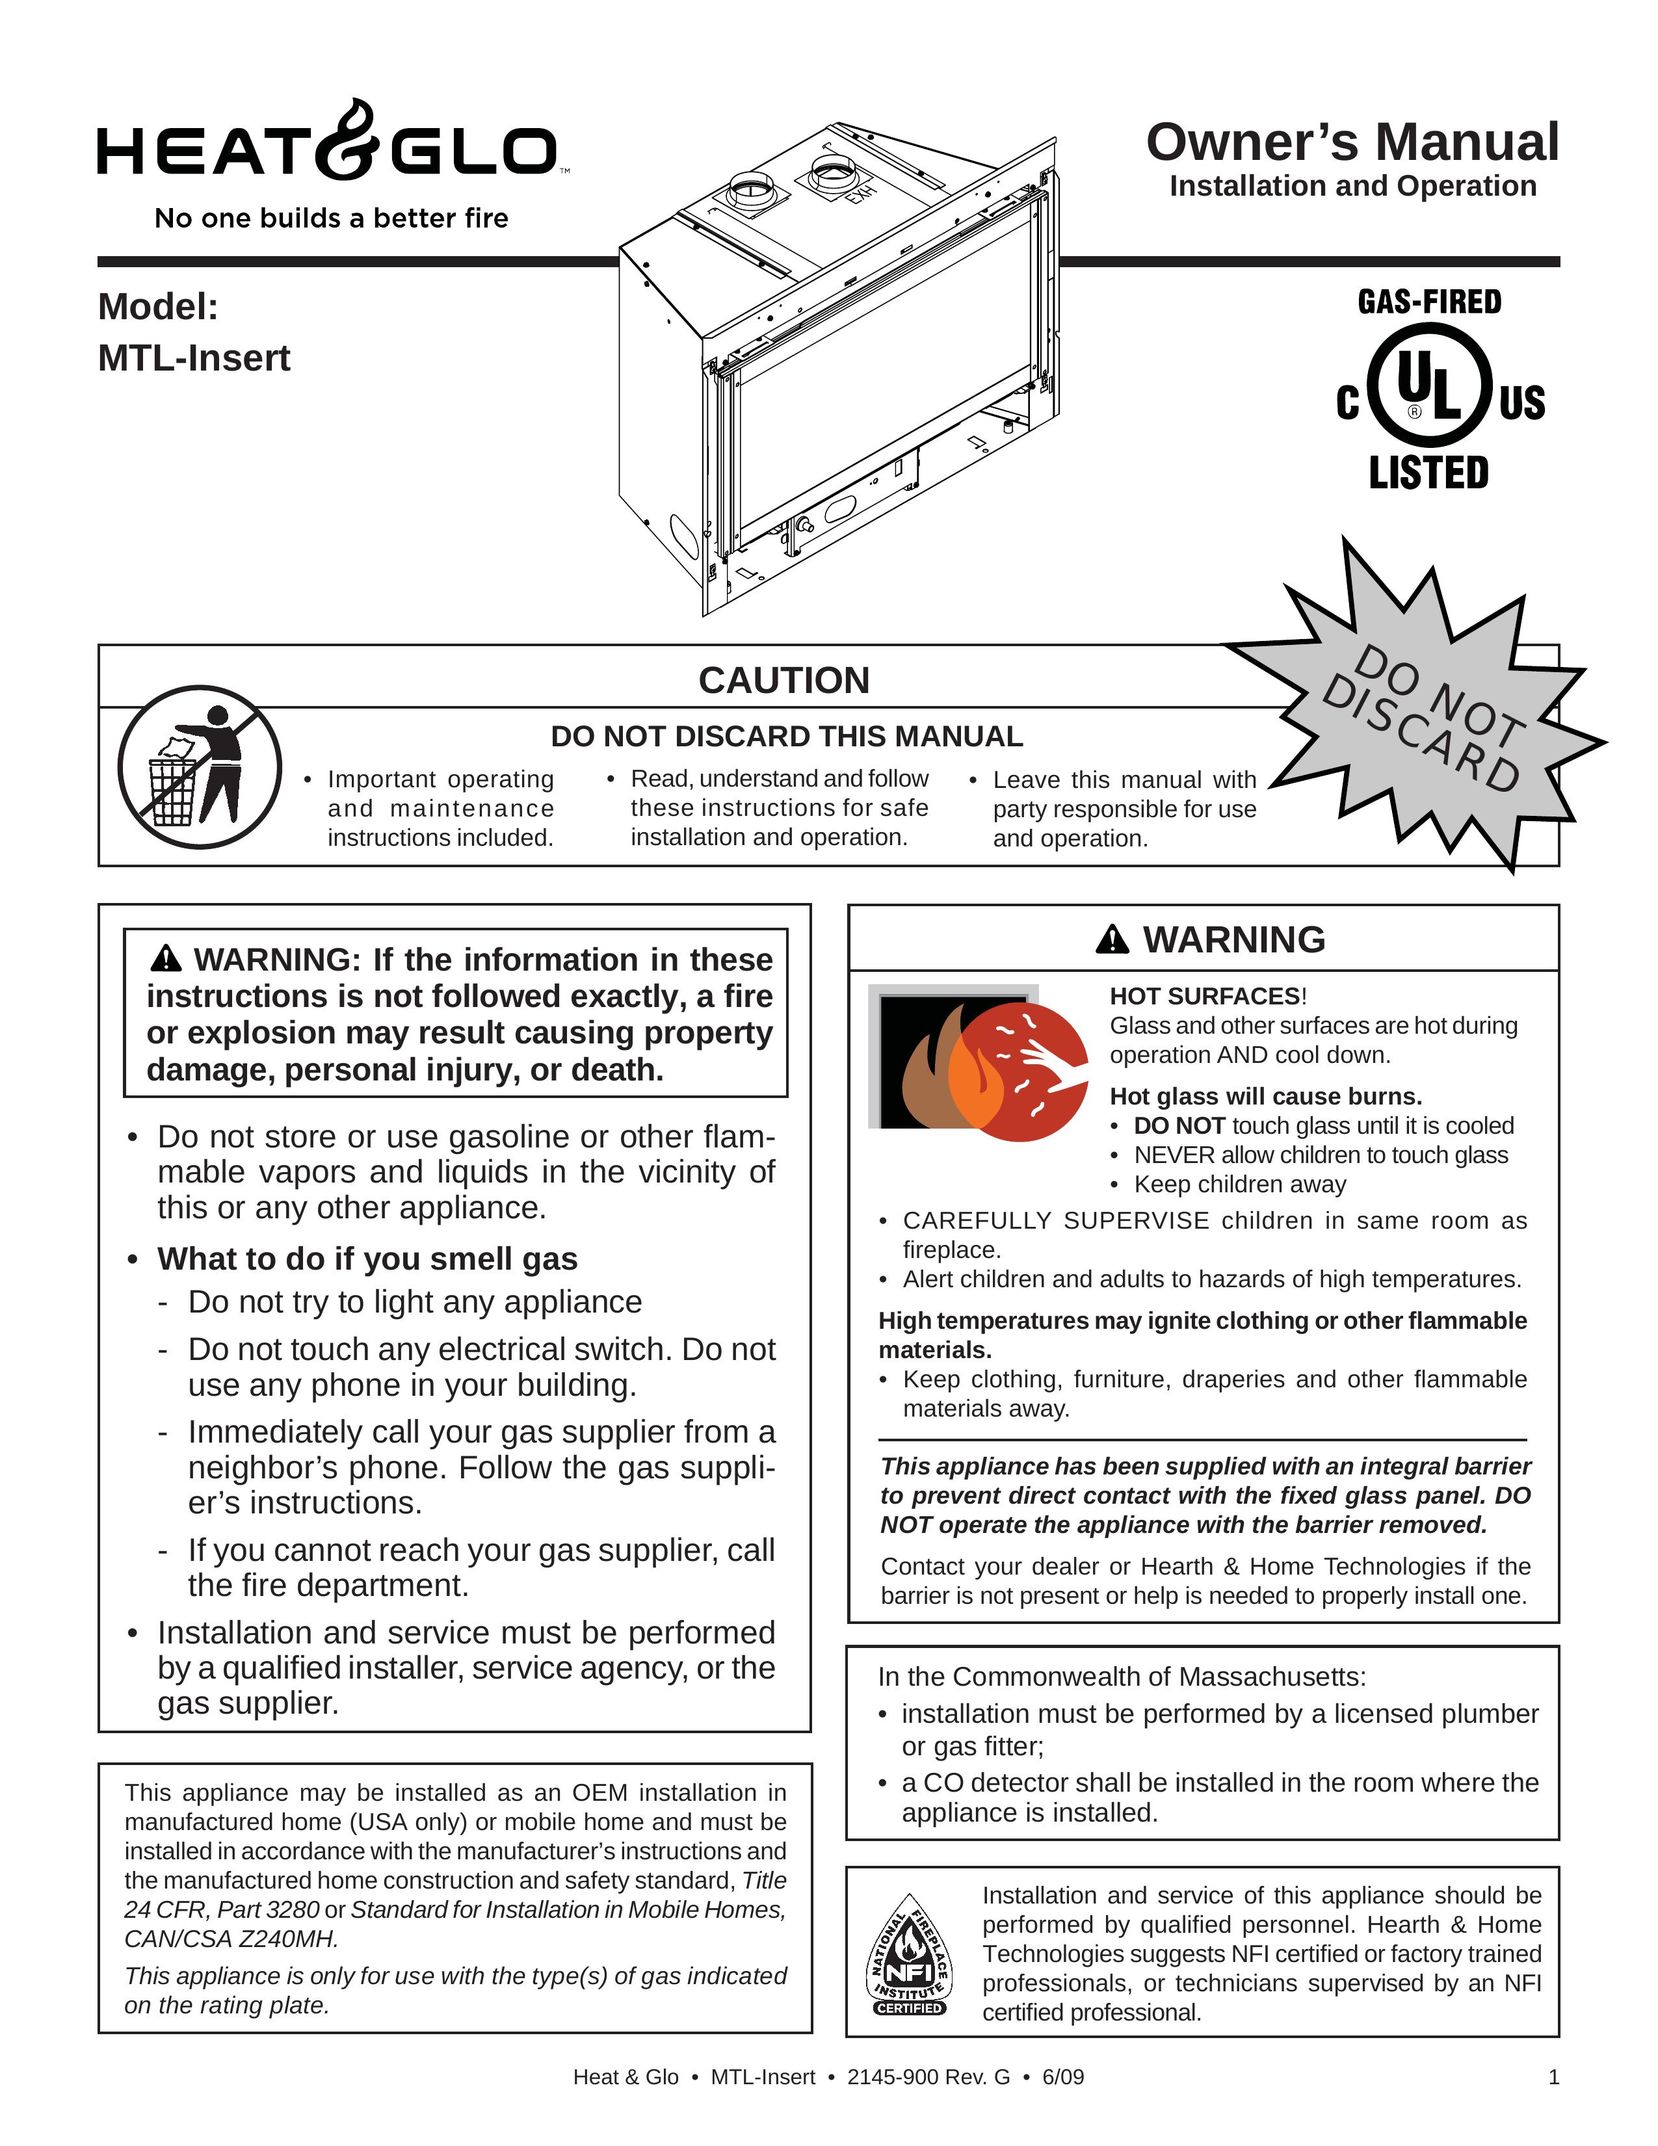 Heat & Glo LifeStyle MTL-INSERT Stove User Manual